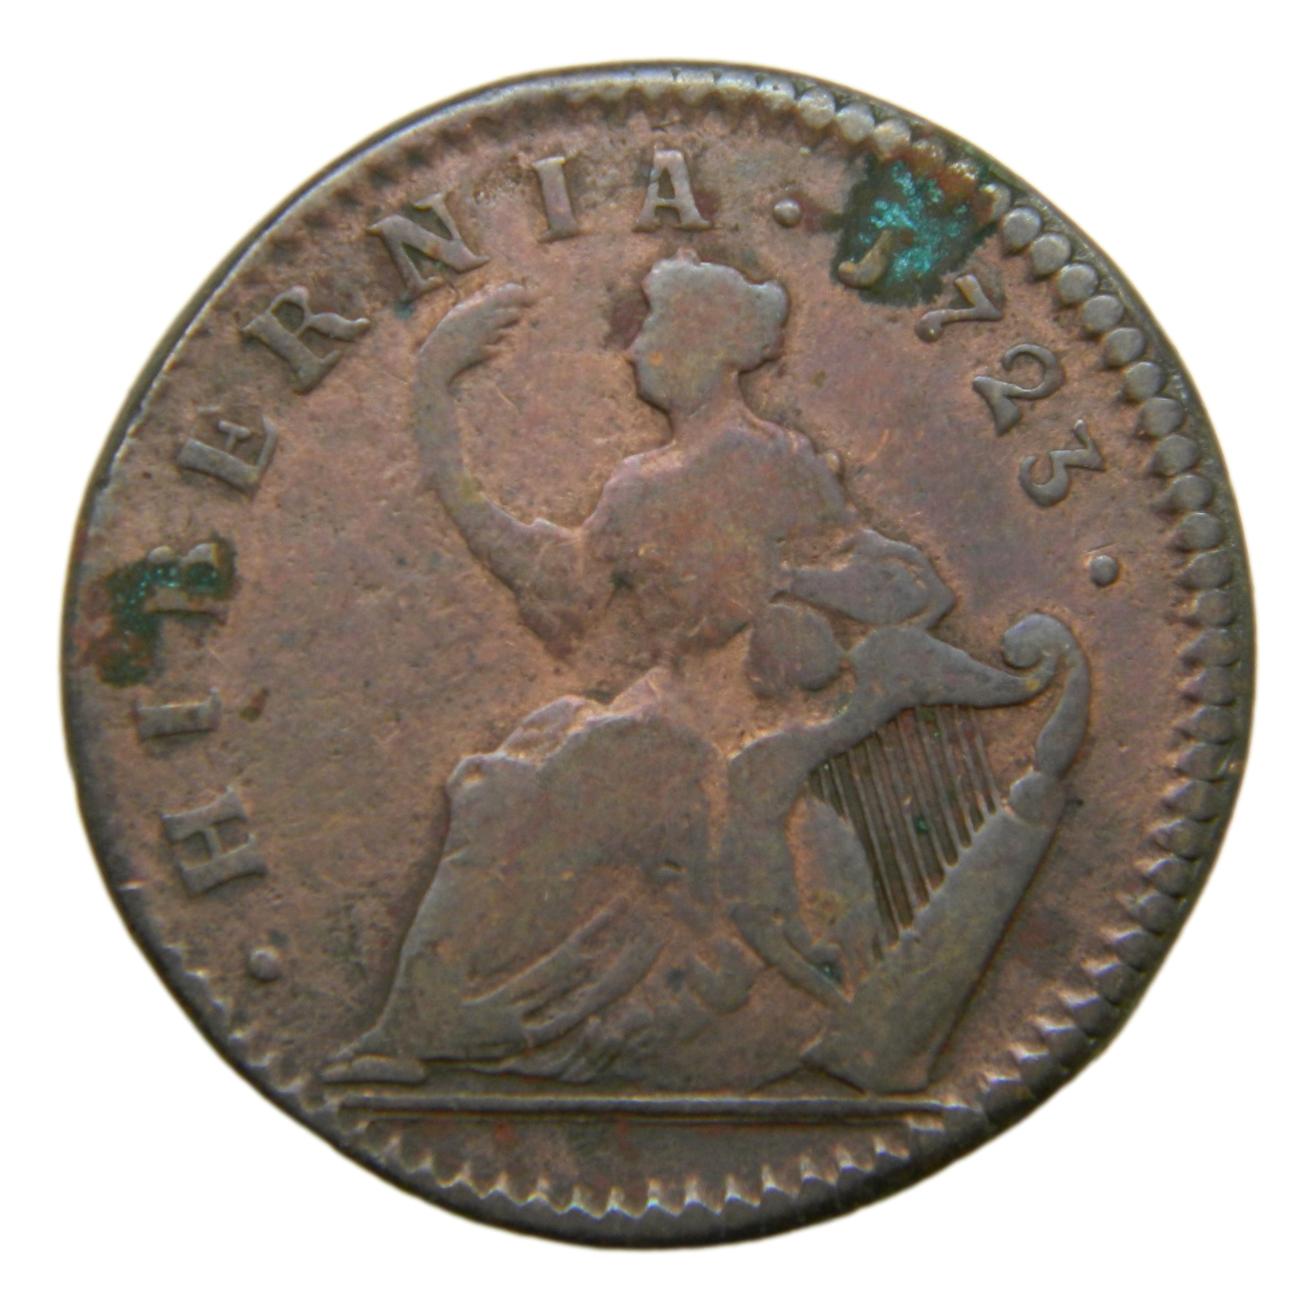 1723 - IRLANDA - HALF PENNY - AMERICAN COLONIAL - GEORGE I - HIBERNIA - S9/412